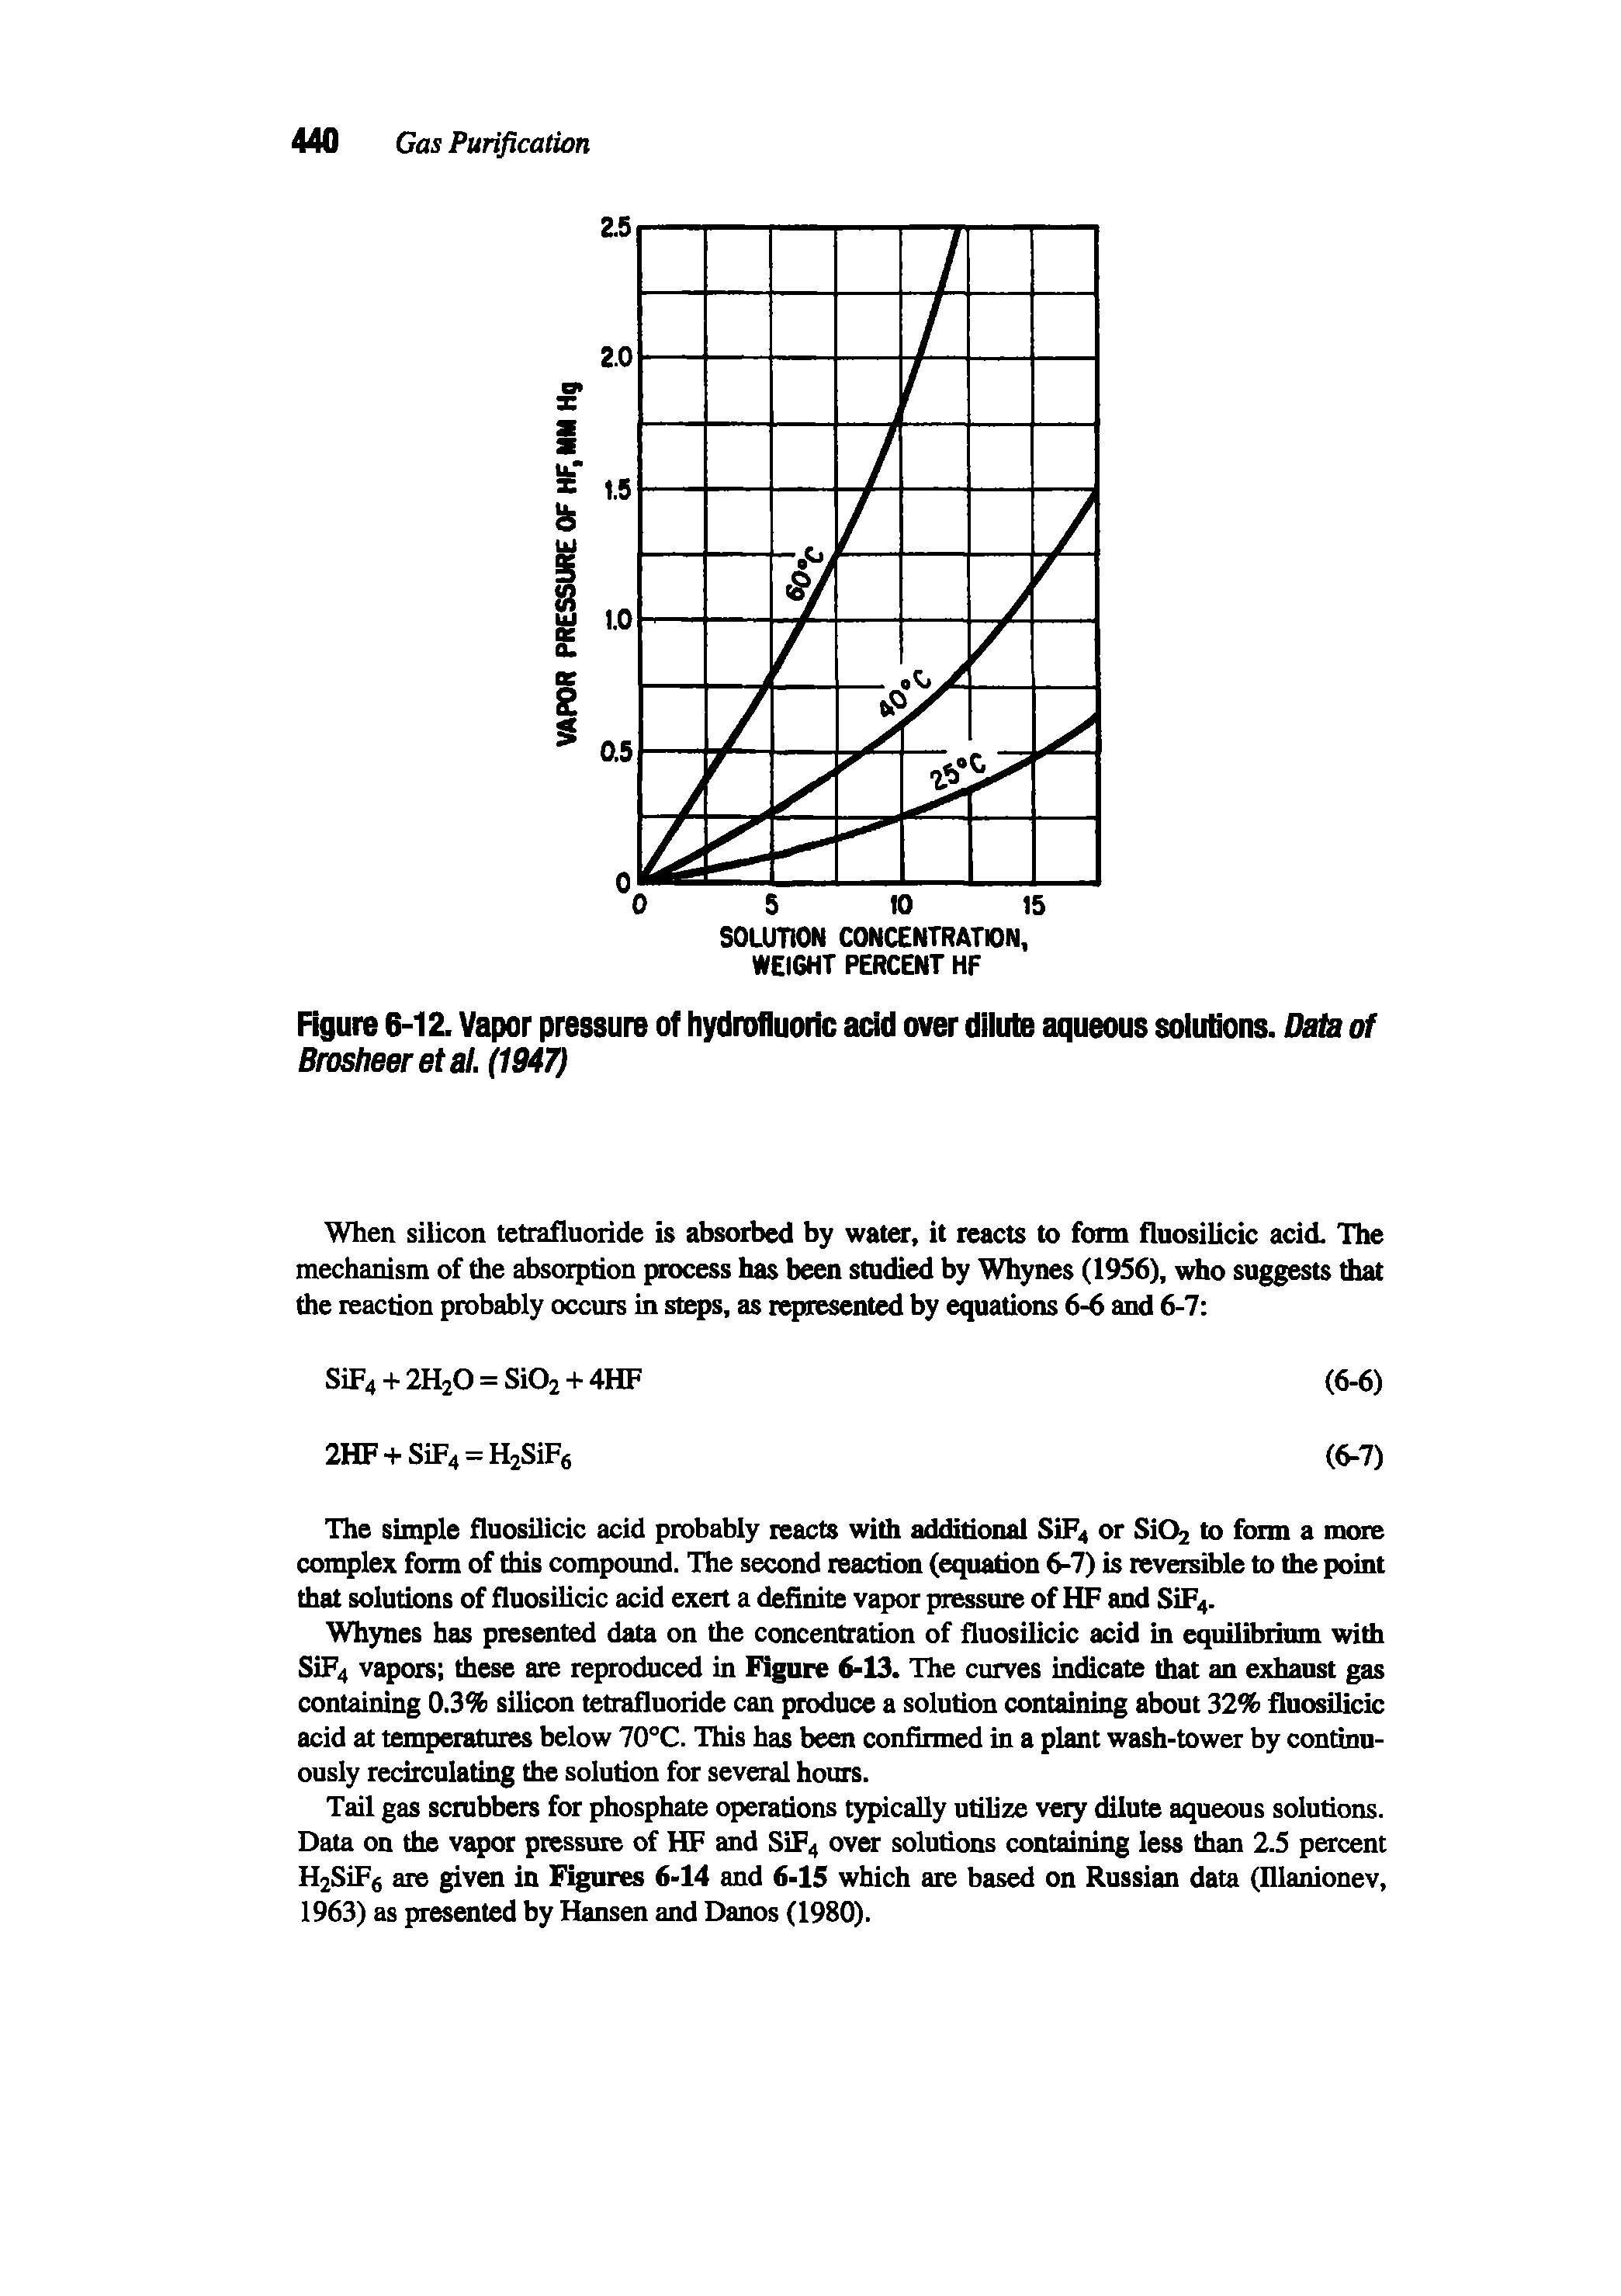 Figure 6-12. Vapor pressure of hydrofluoric add over dilute aqueous solutions. Data of Brosheeretal. (1947)...